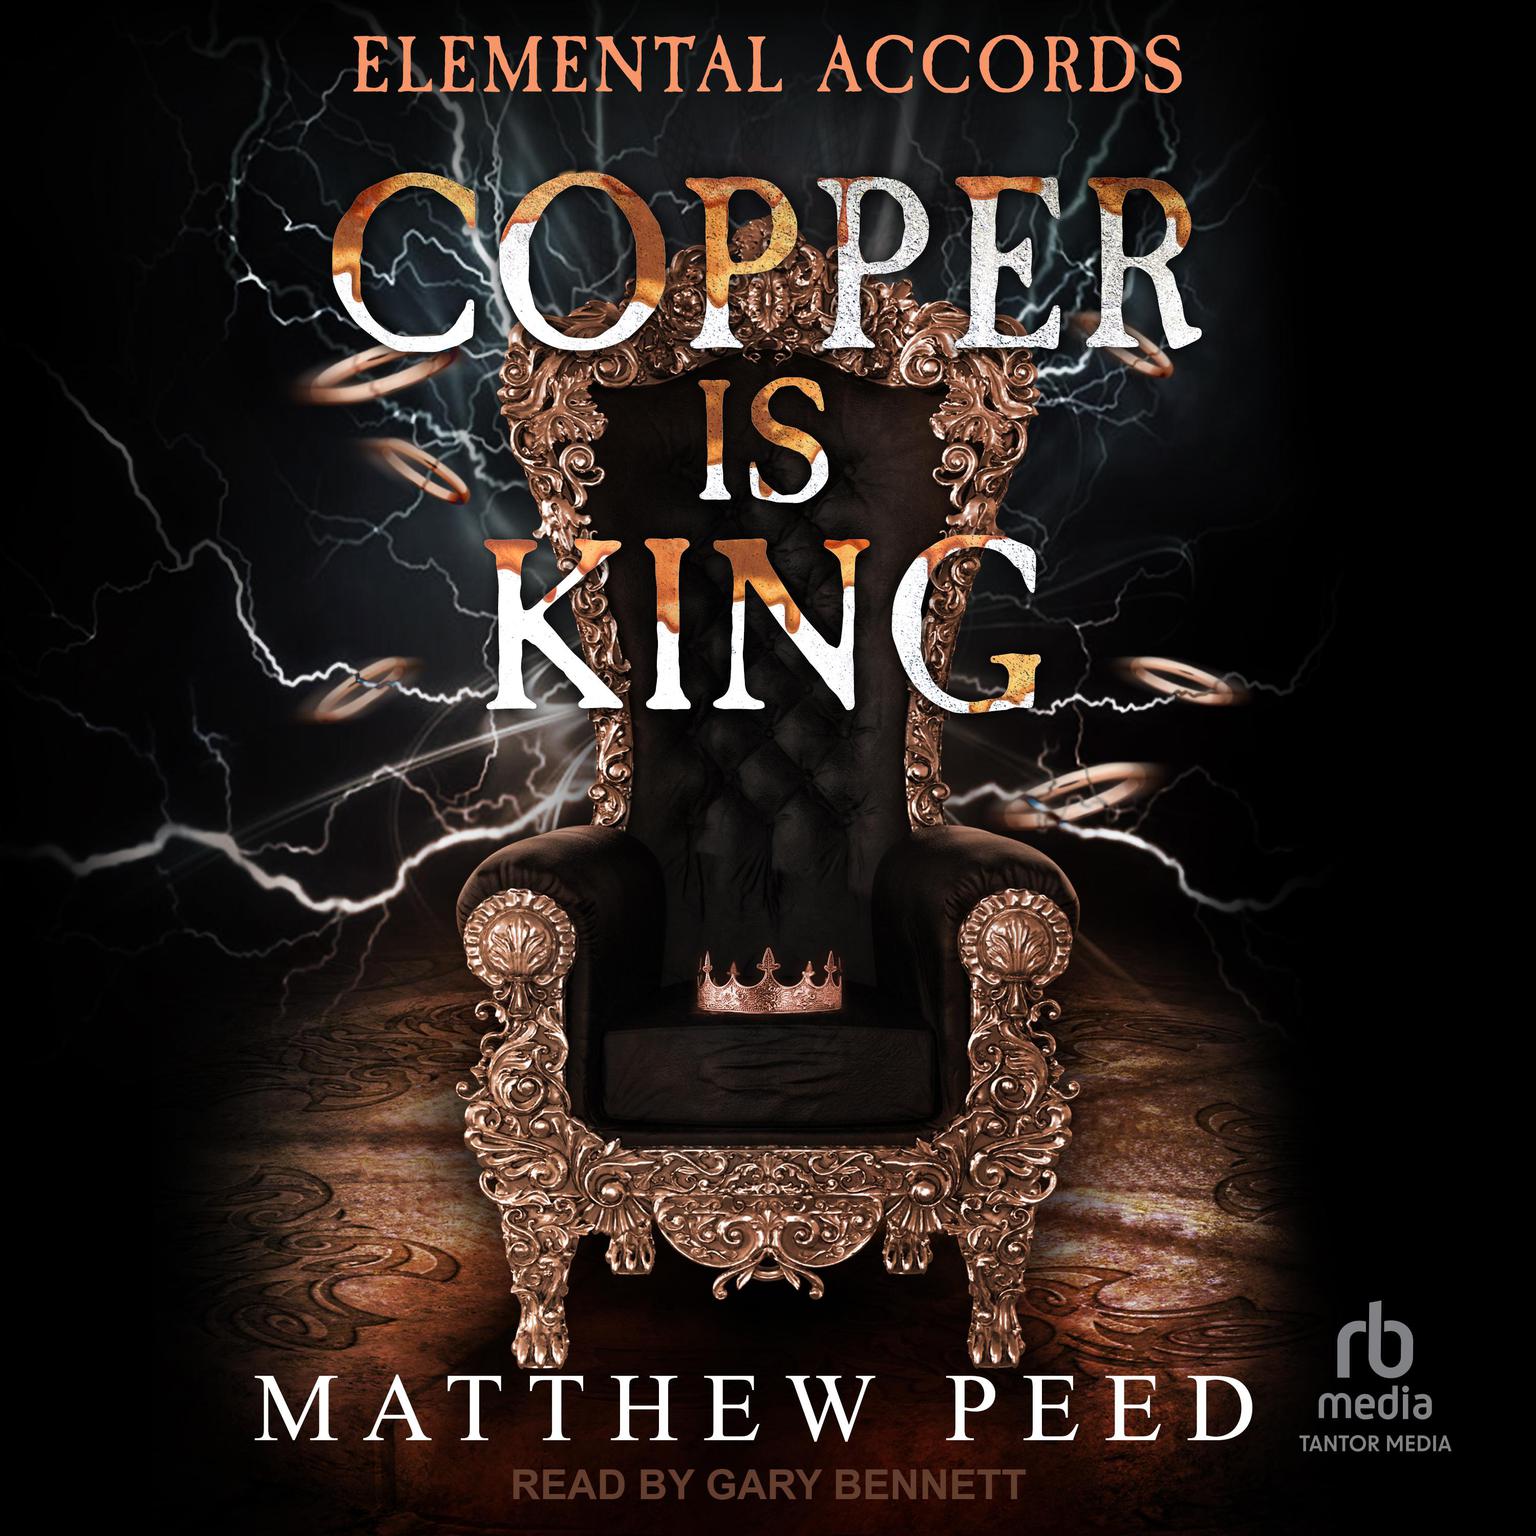 Copper is King Audiobook, by Matthew Peed